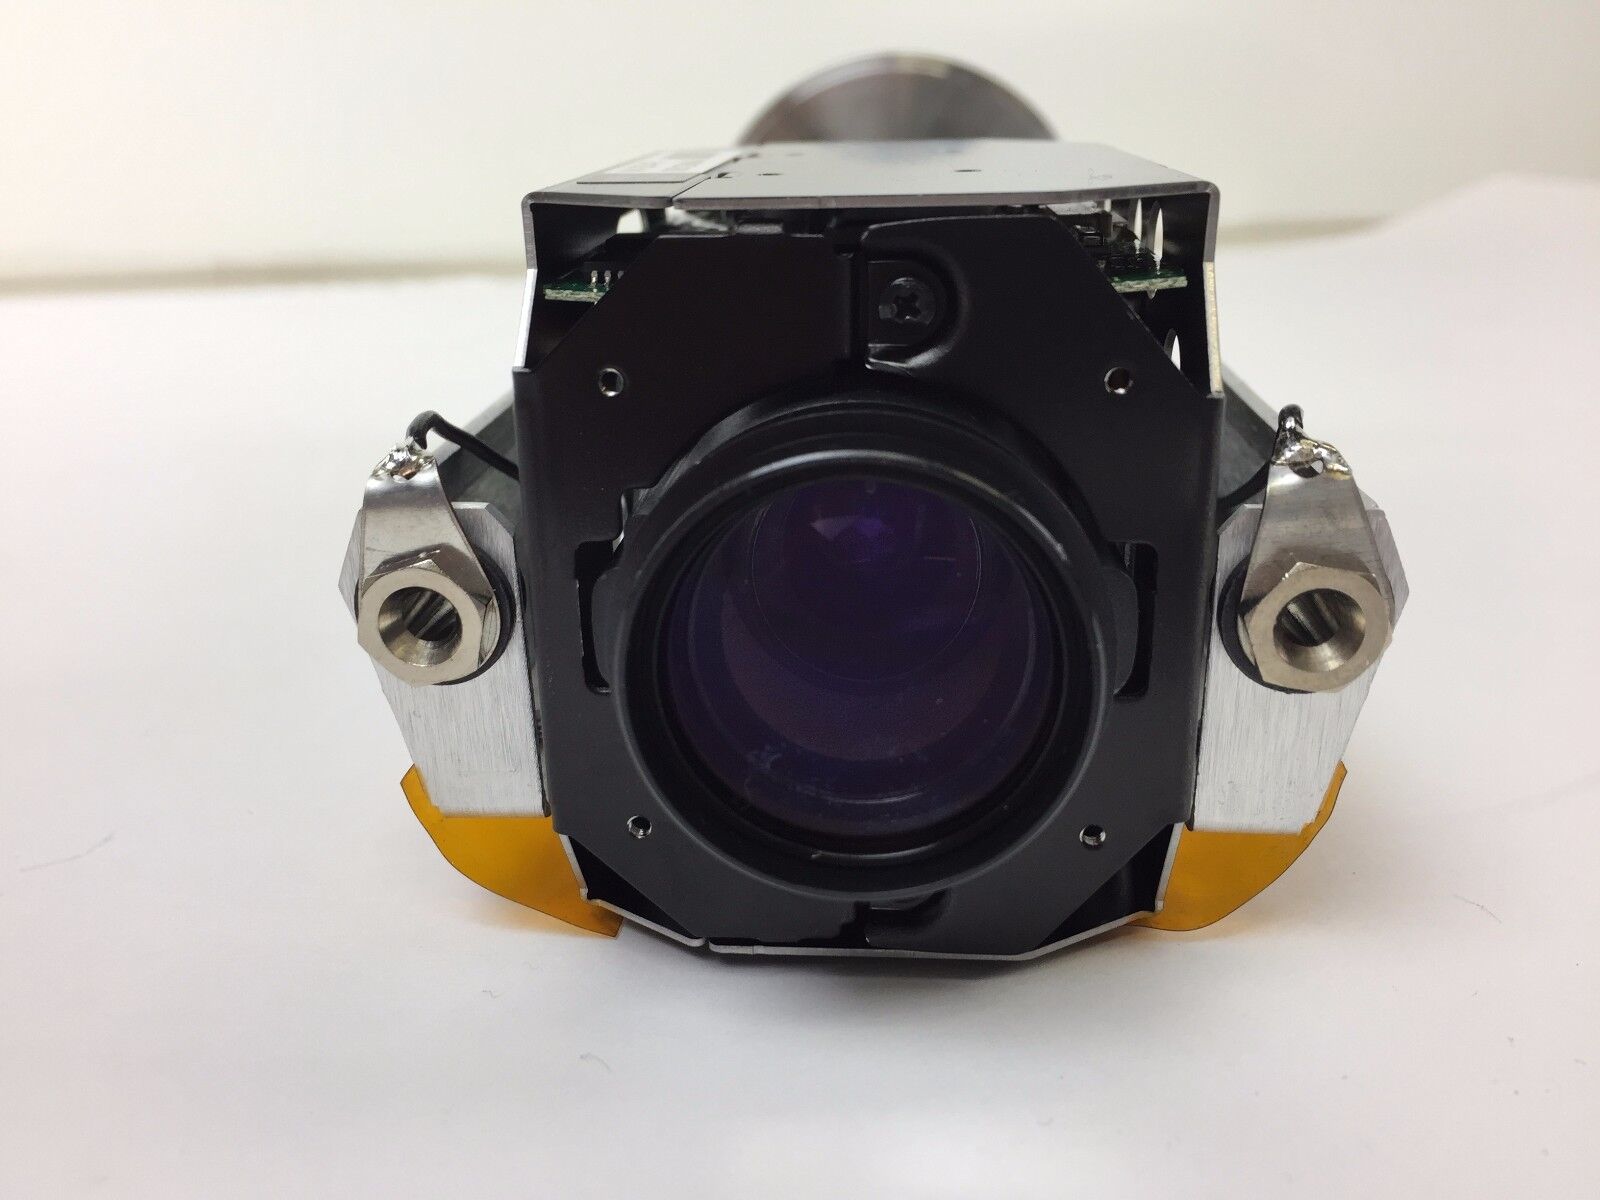 Hitachi VK-S214R Surveillance Camera with WTI-WL6 Lens and 110V AC Power Board S